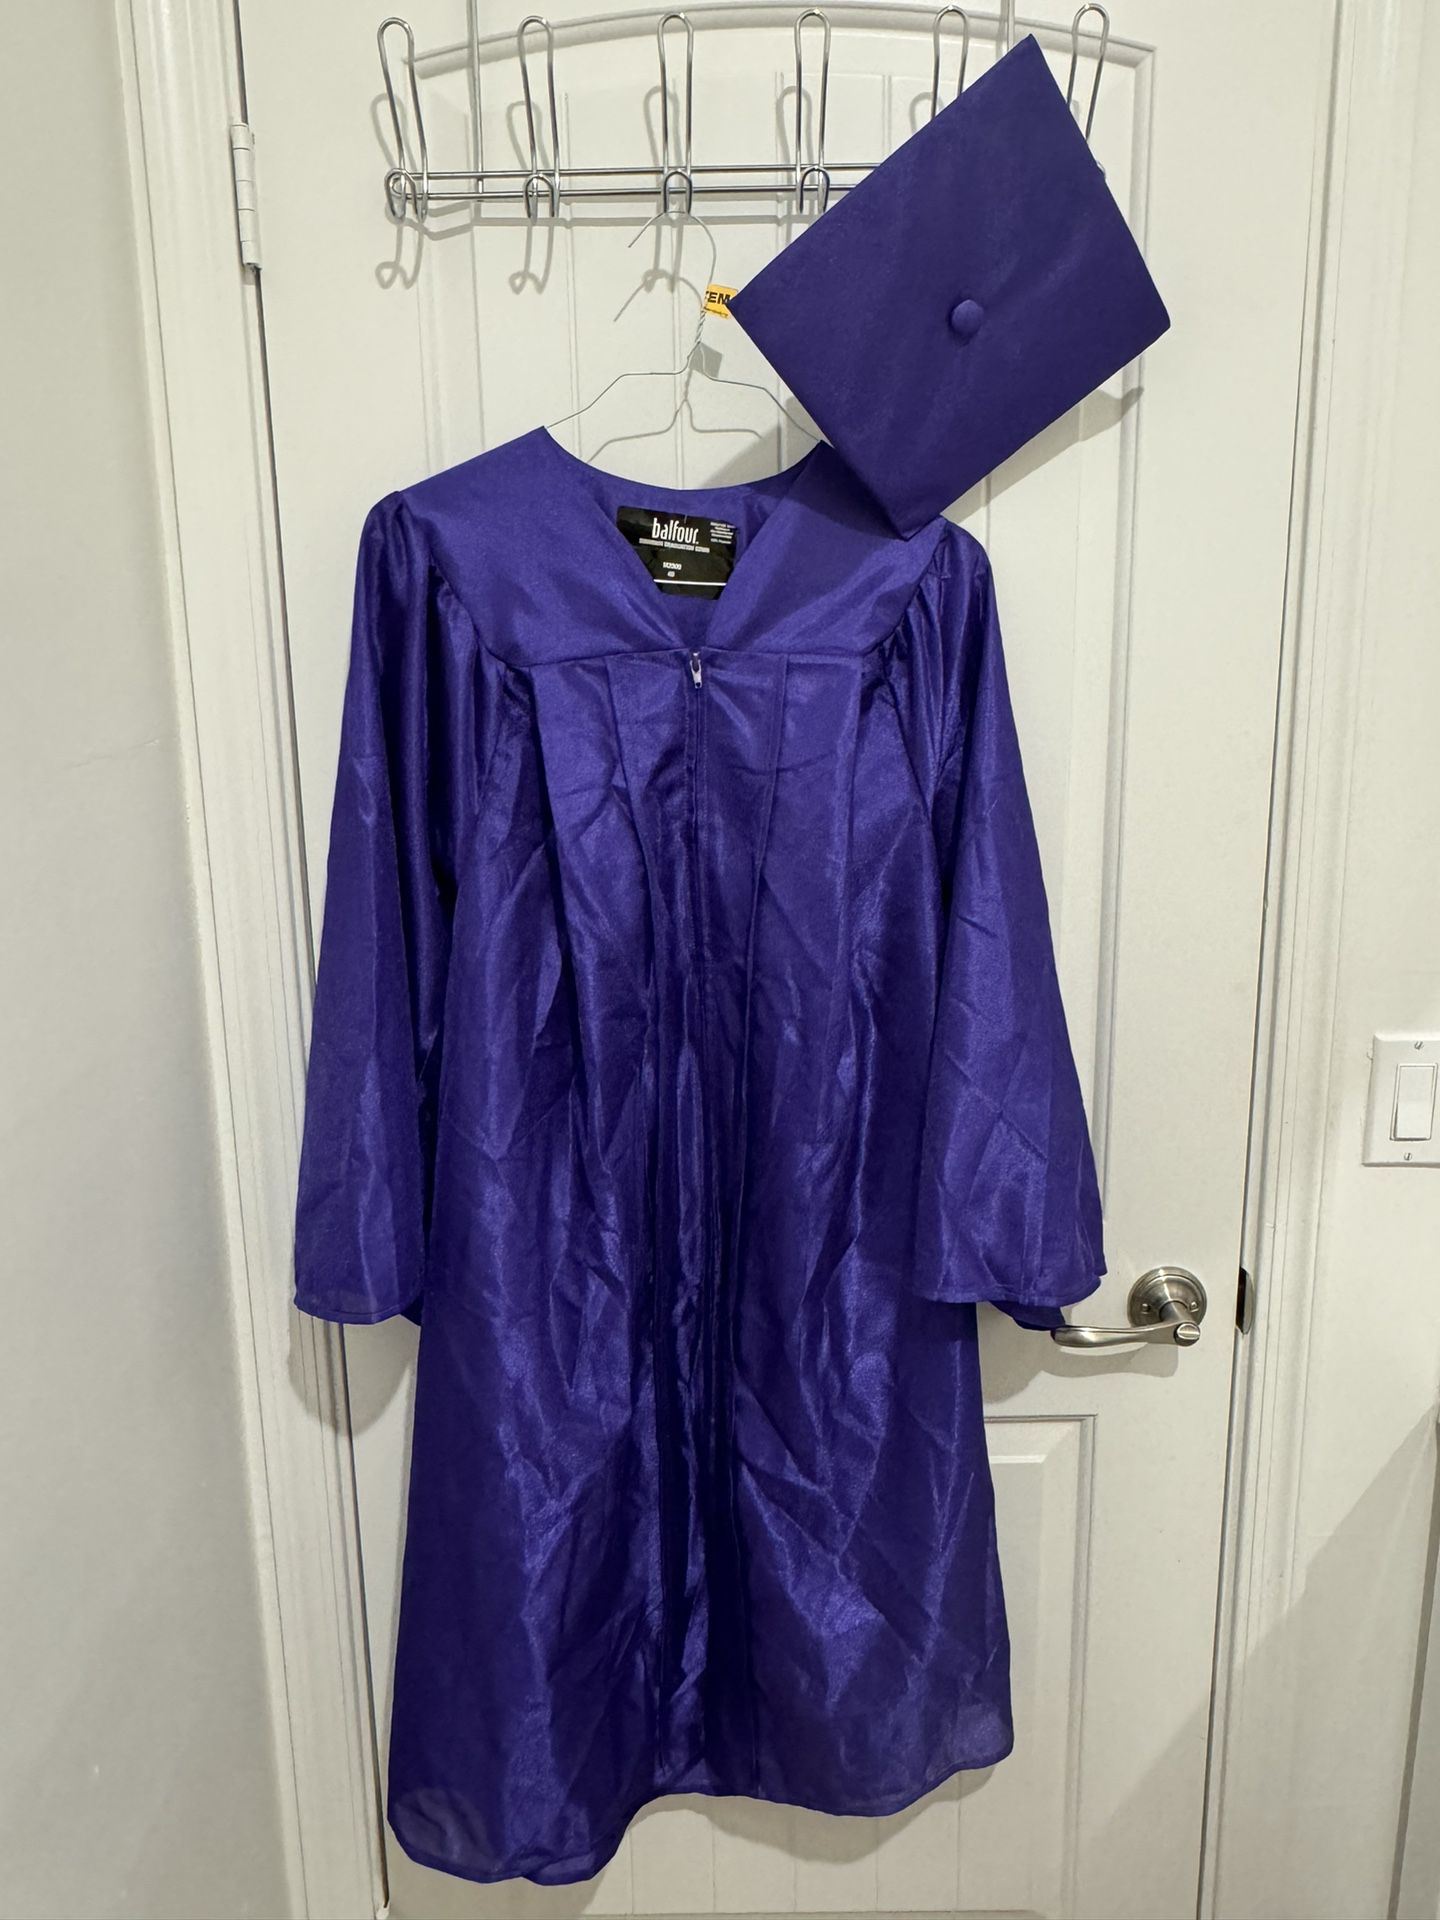 EMCC Graduation Cap And Gown